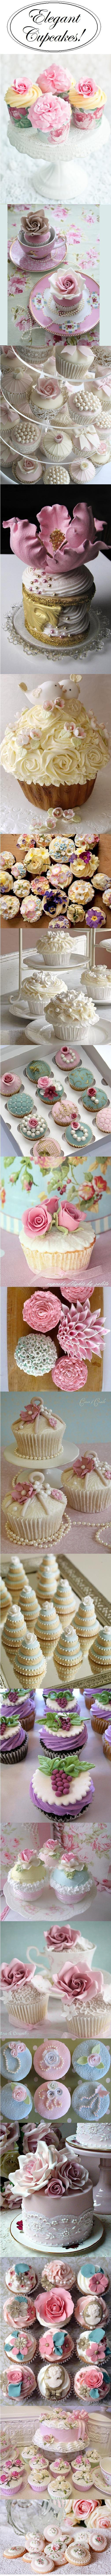 زفاف - Wedding Cupcakes